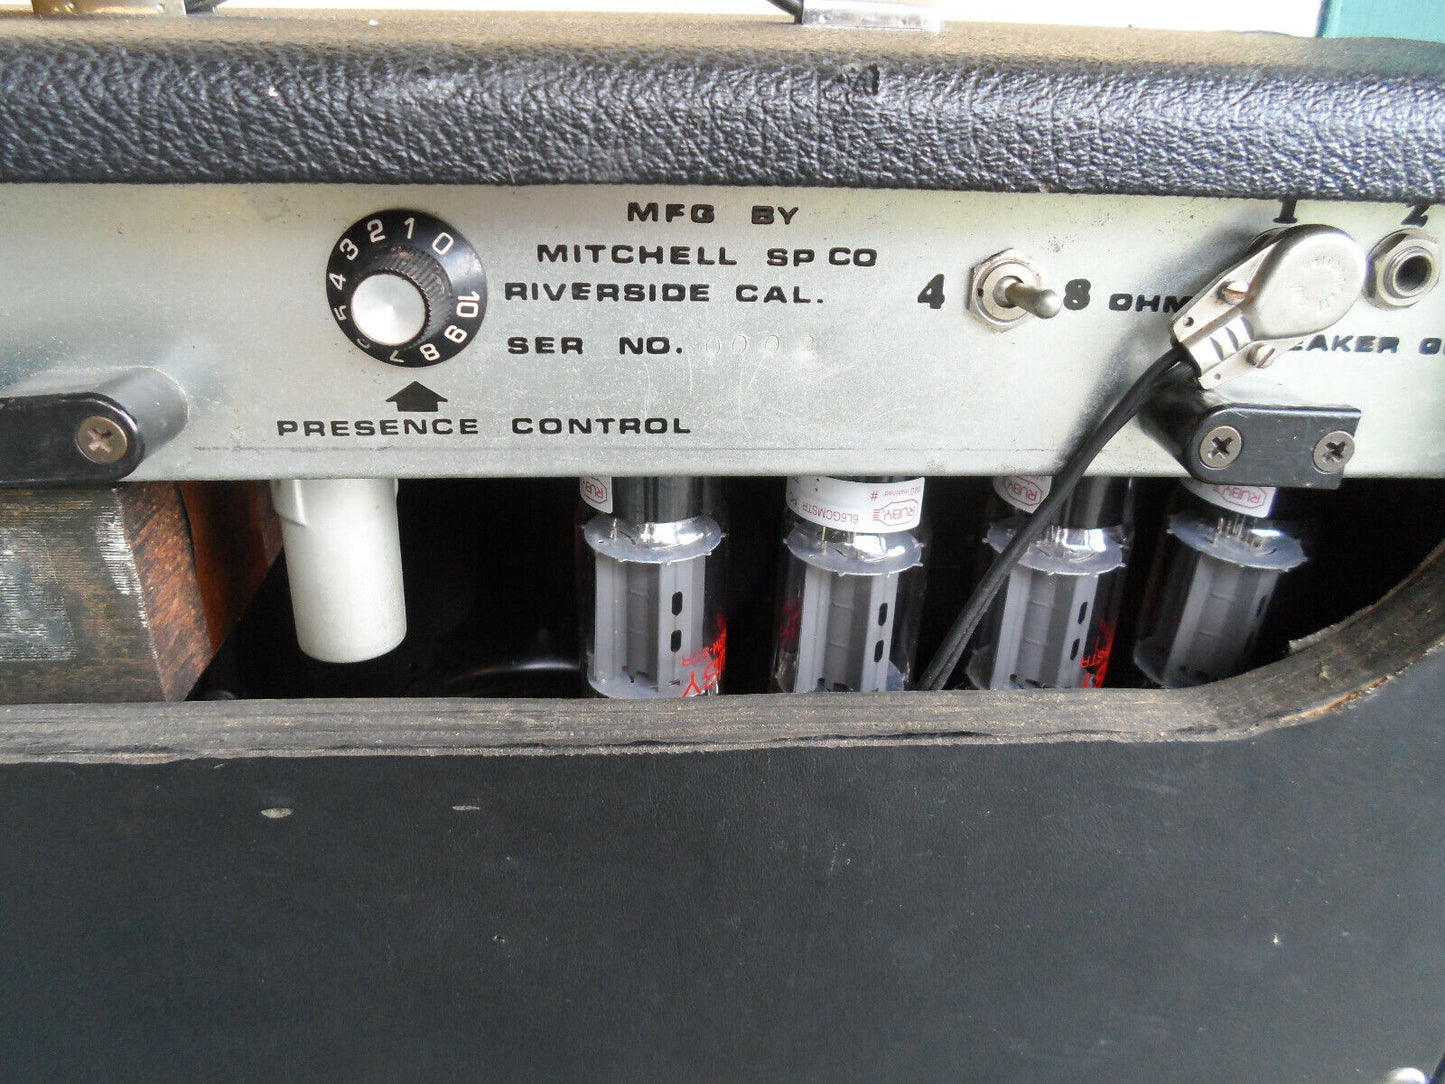 1970s Mitchell Pro-100 Vintage 100 Watt Tube Guitar 1x12 Combo Amp Boogie Mark I